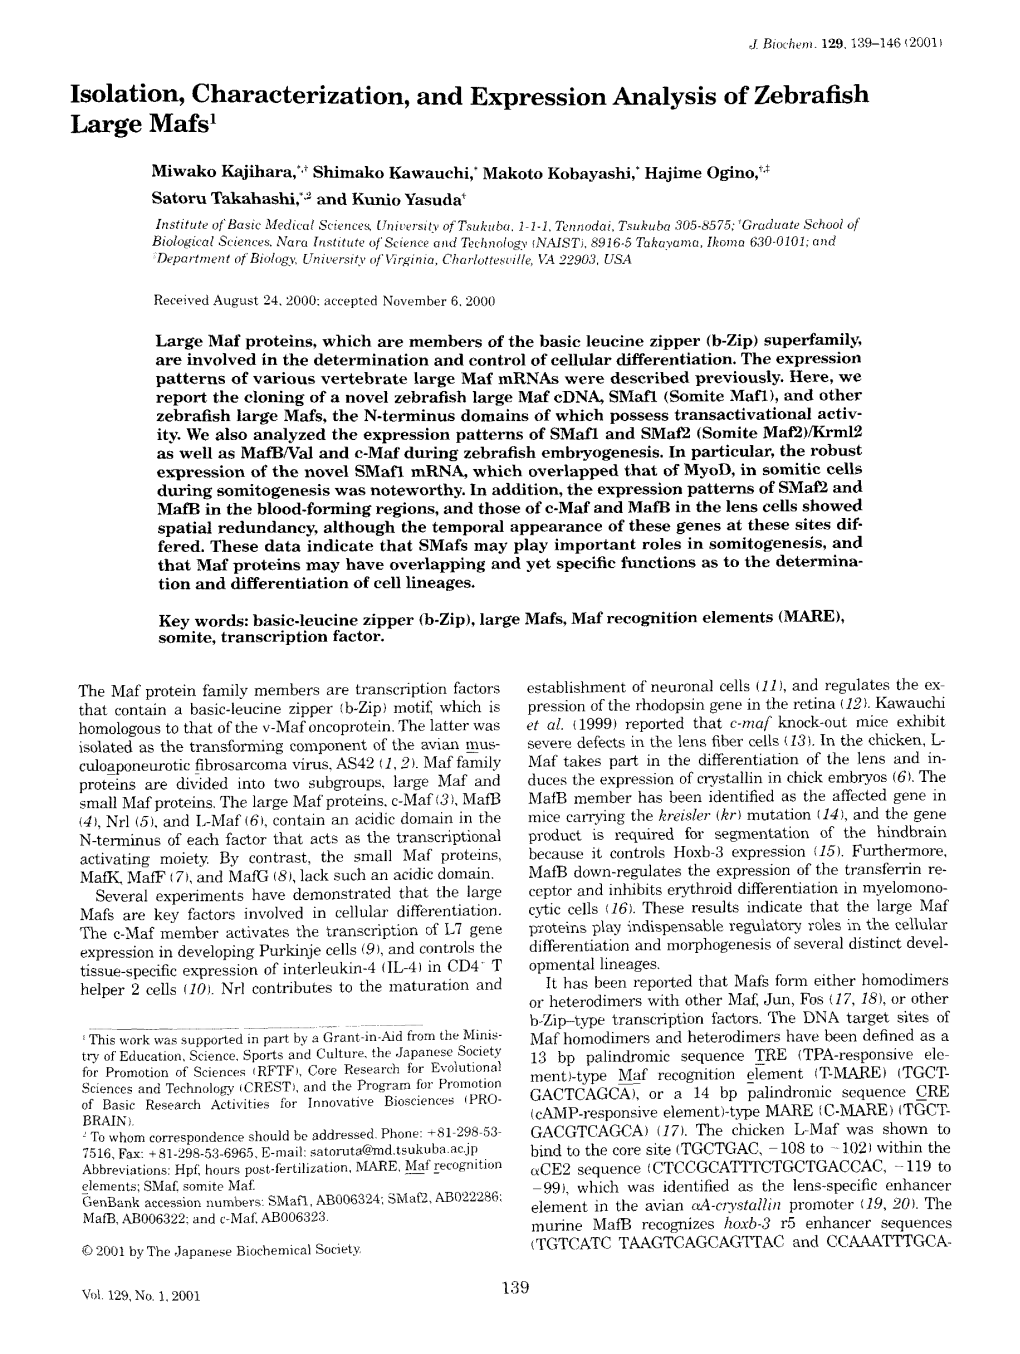 Isolation, Characterization, and Expression Analysis of Zebrafish Large Mafs1